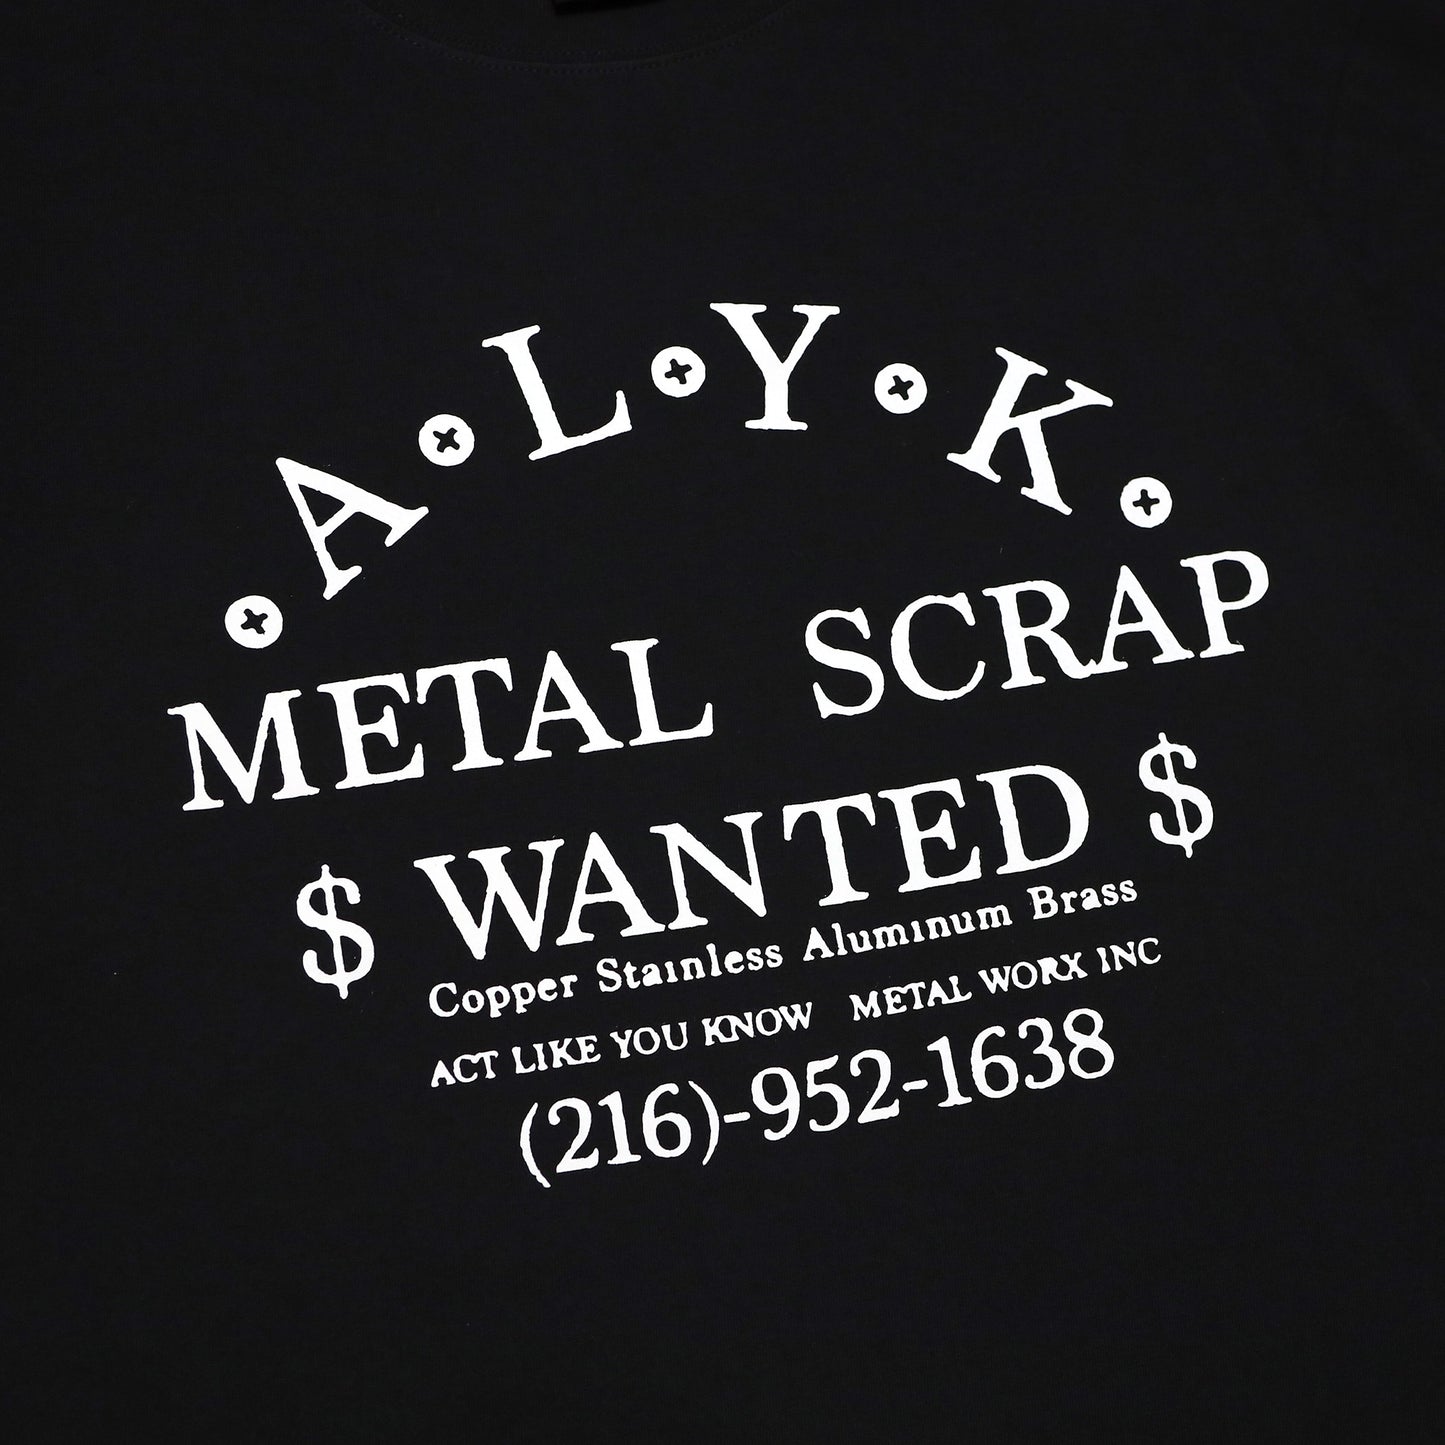 ALYK - Wanted T-Shirt/Black